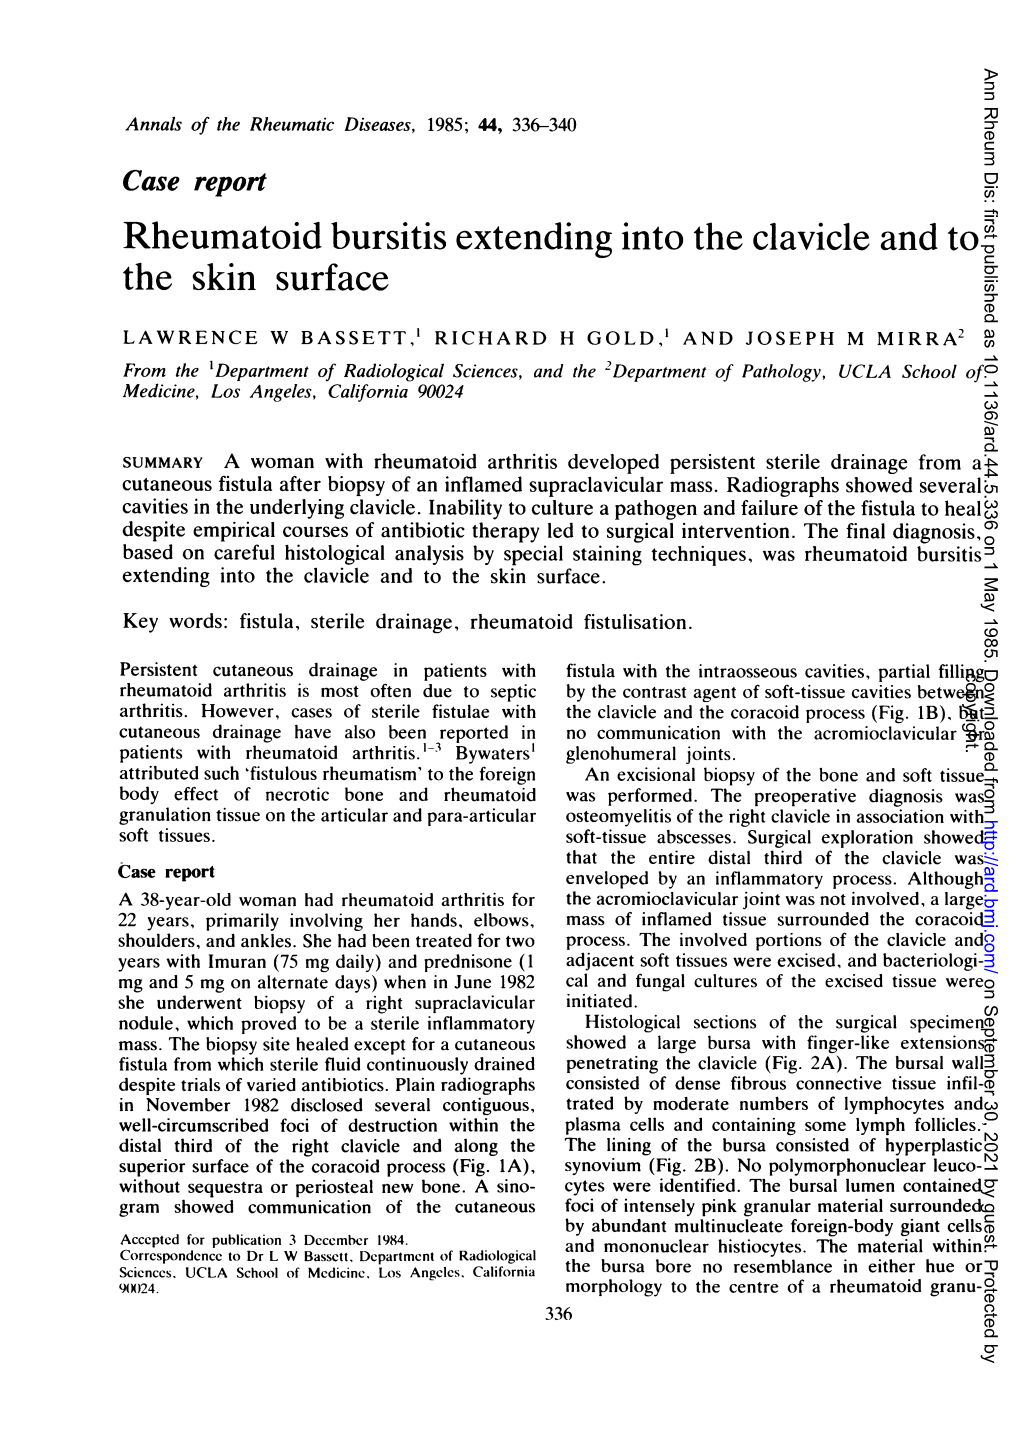 Rheumatoid Bursitis Extending Into the Clavicle and to the Skin Surface. Key Words: Fistula, Sterile Drainage, Rheumatoid Fistulisation